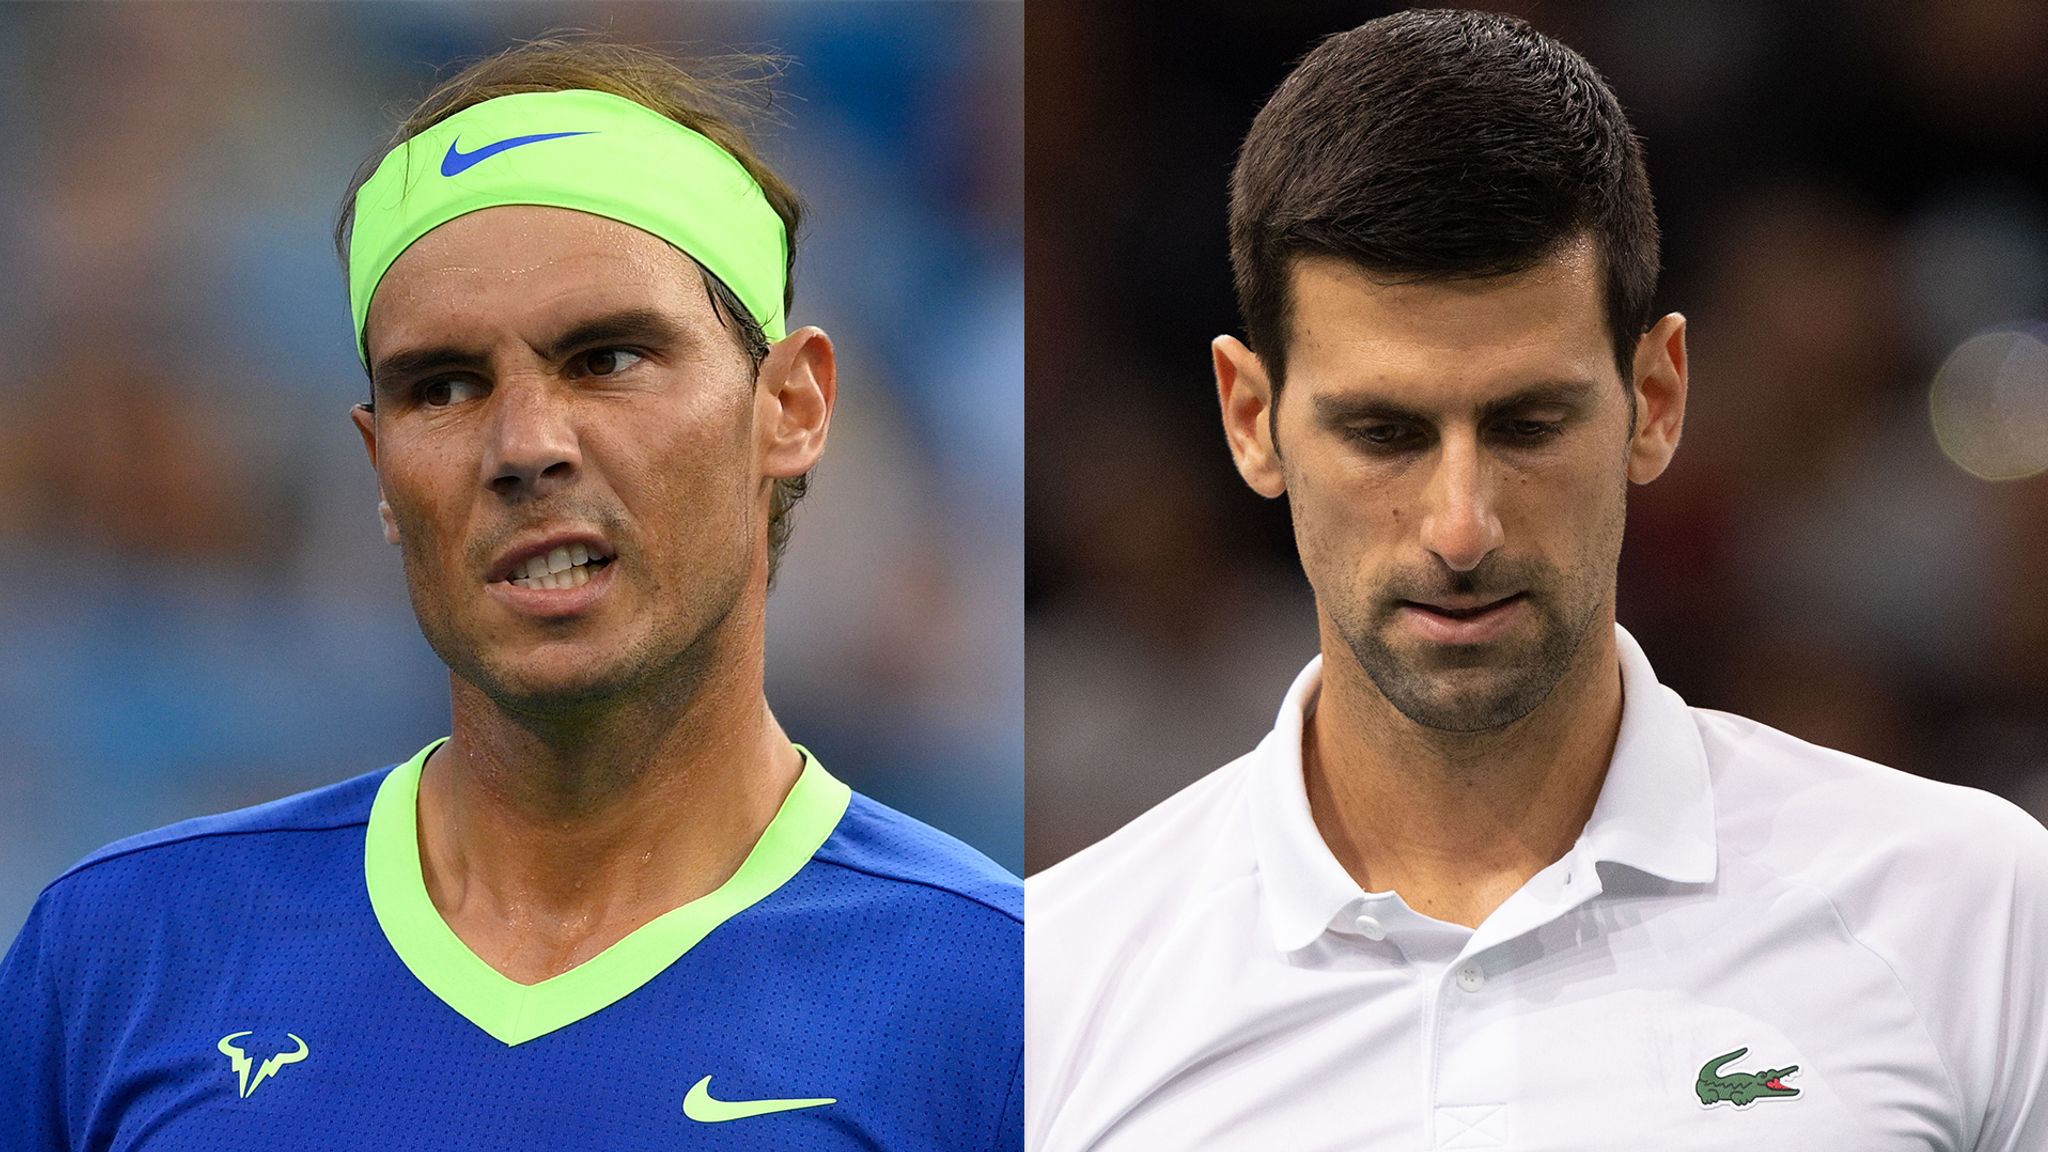 Wimbledon 2022 LIVE: Novak Djokovic TOP Seed, Casper Ruud to get 3rd seeding, Wimbledon Draws to be released on Friday: Follow LIVE